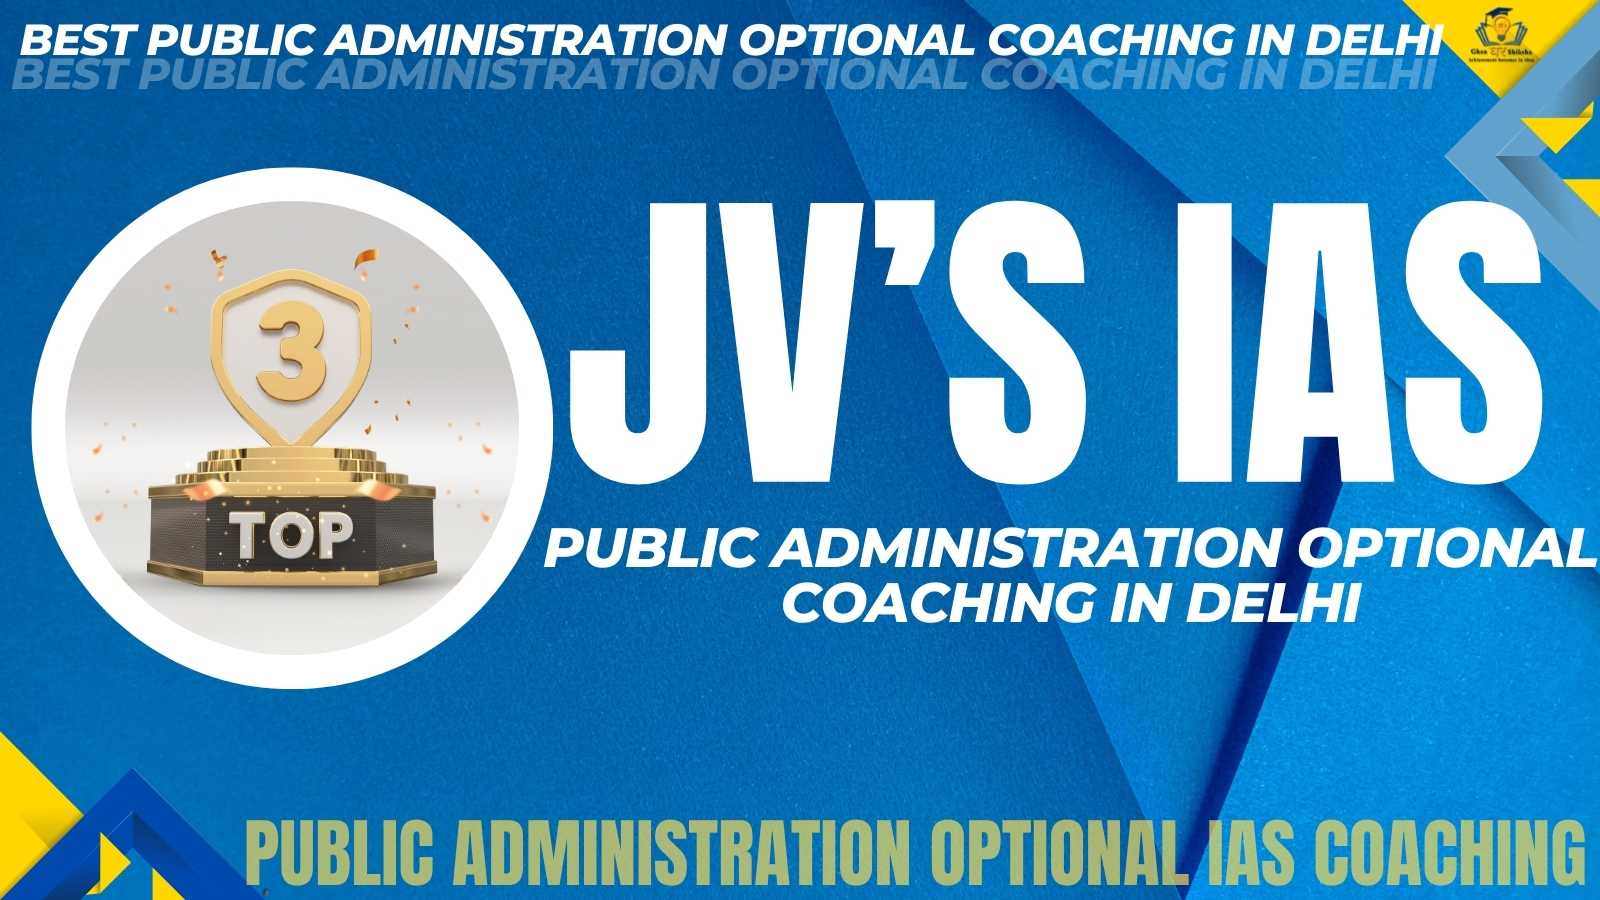 Best Public Administration optional Coaching Institute In Delhi